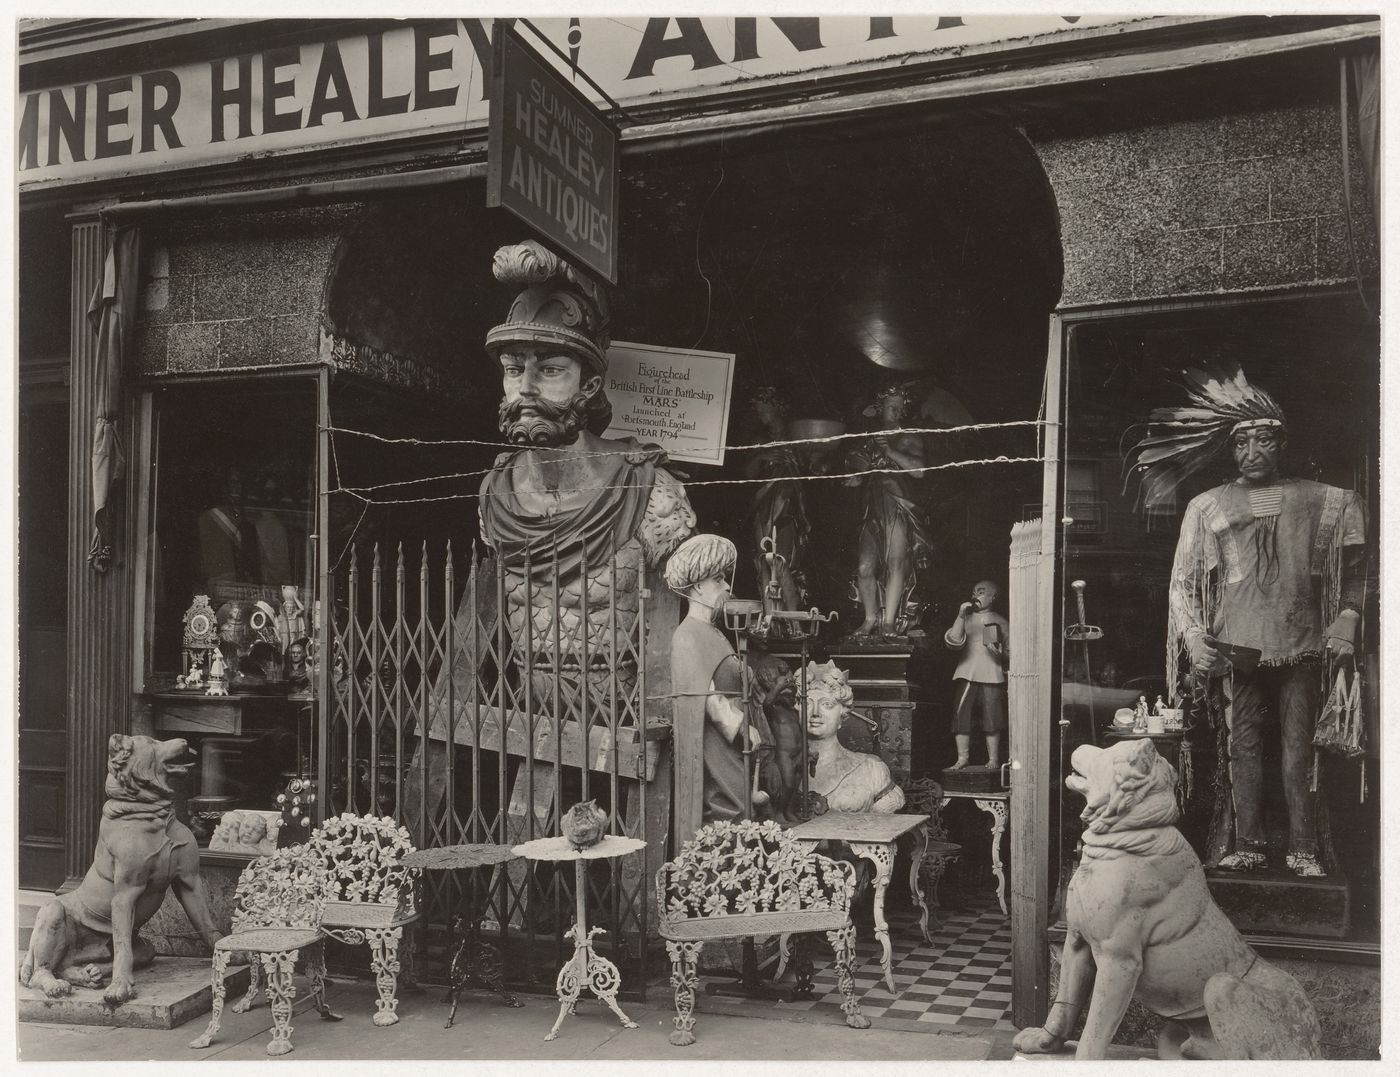 Sumner Healy Antique Shop, 942 Third avenue, near 57th Street, Manhattan